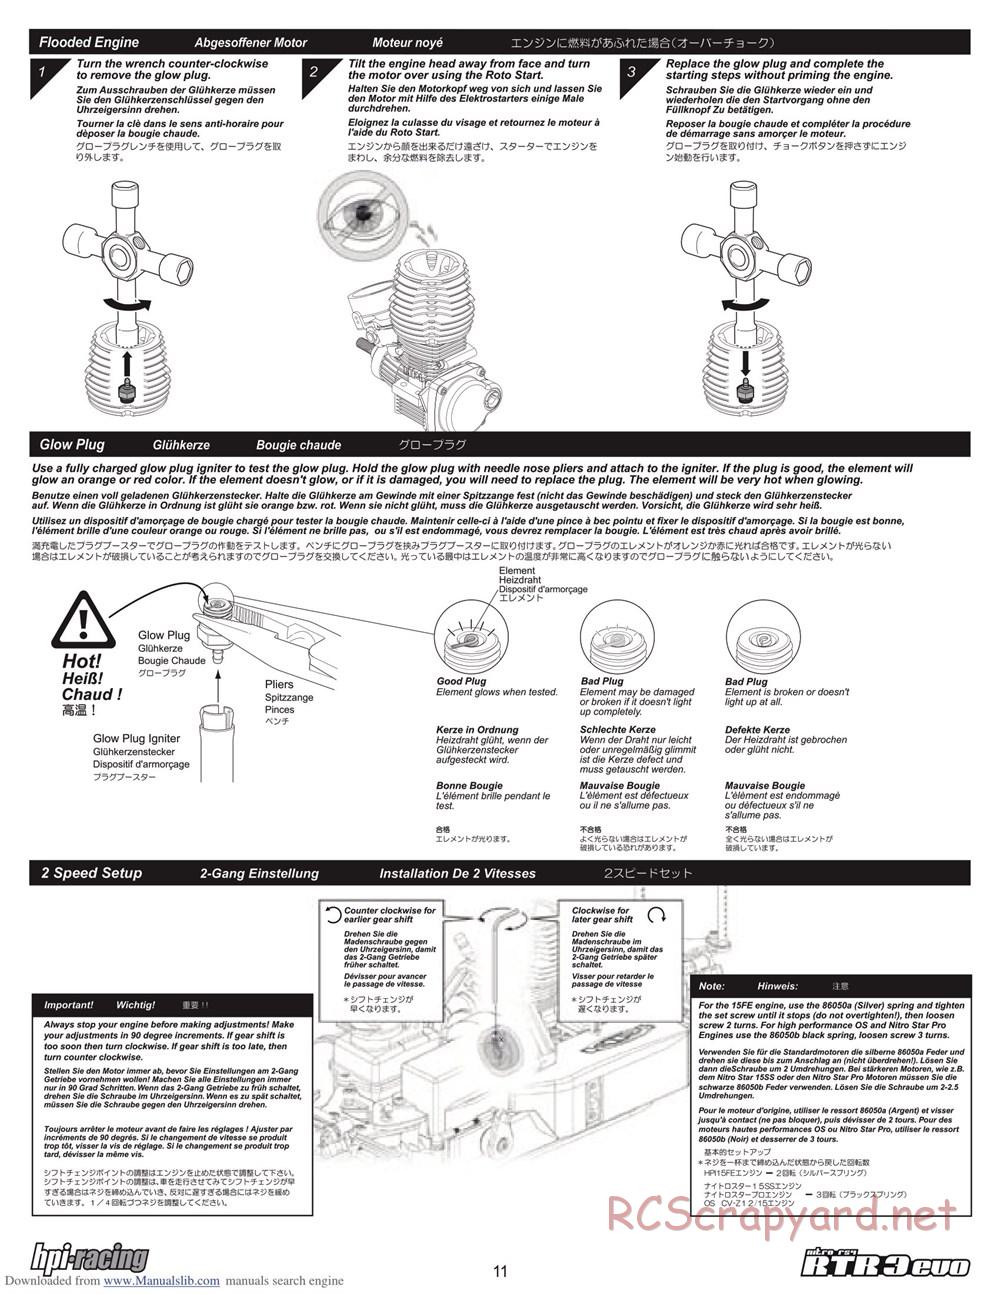 HPI - Nitro RS4 3 Evo - Manual - Page 11